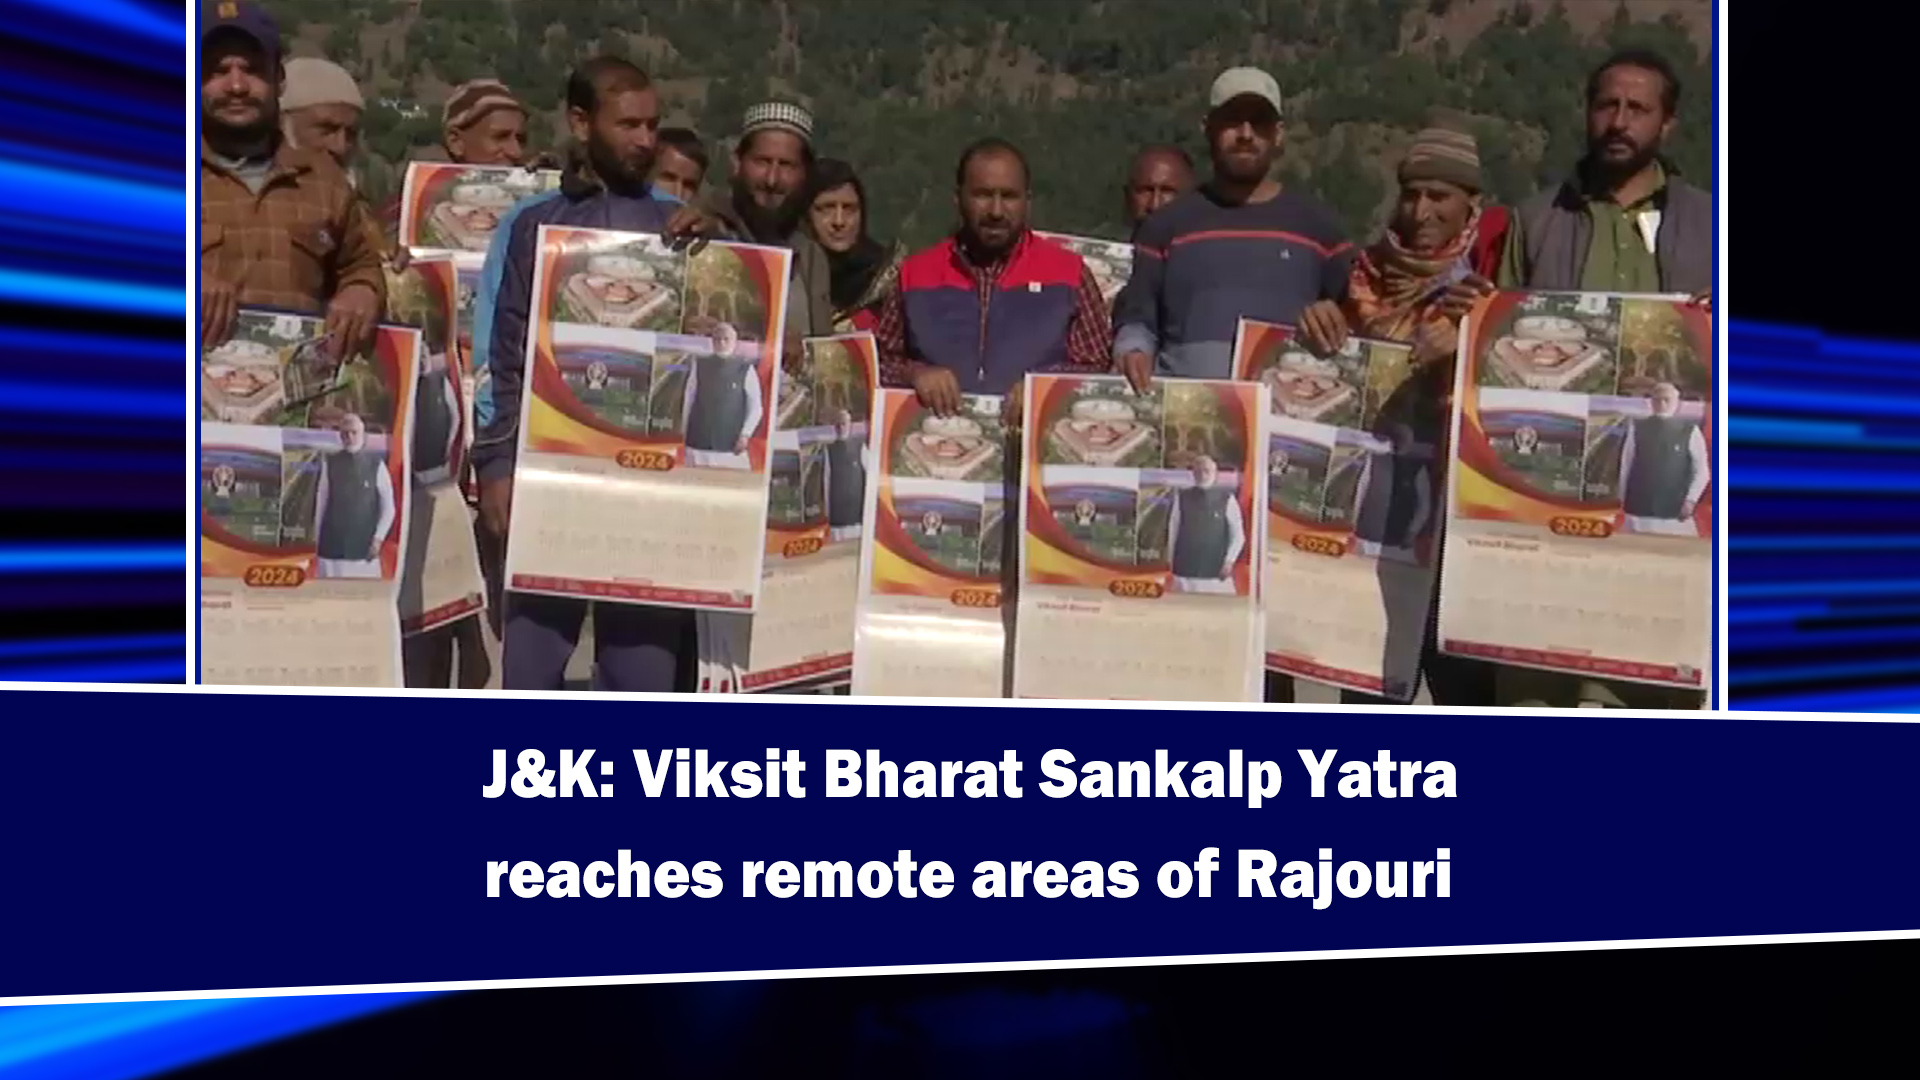 j&K: Viksit Bharat Sankalp Yatra reaches remote areas of Rajouri